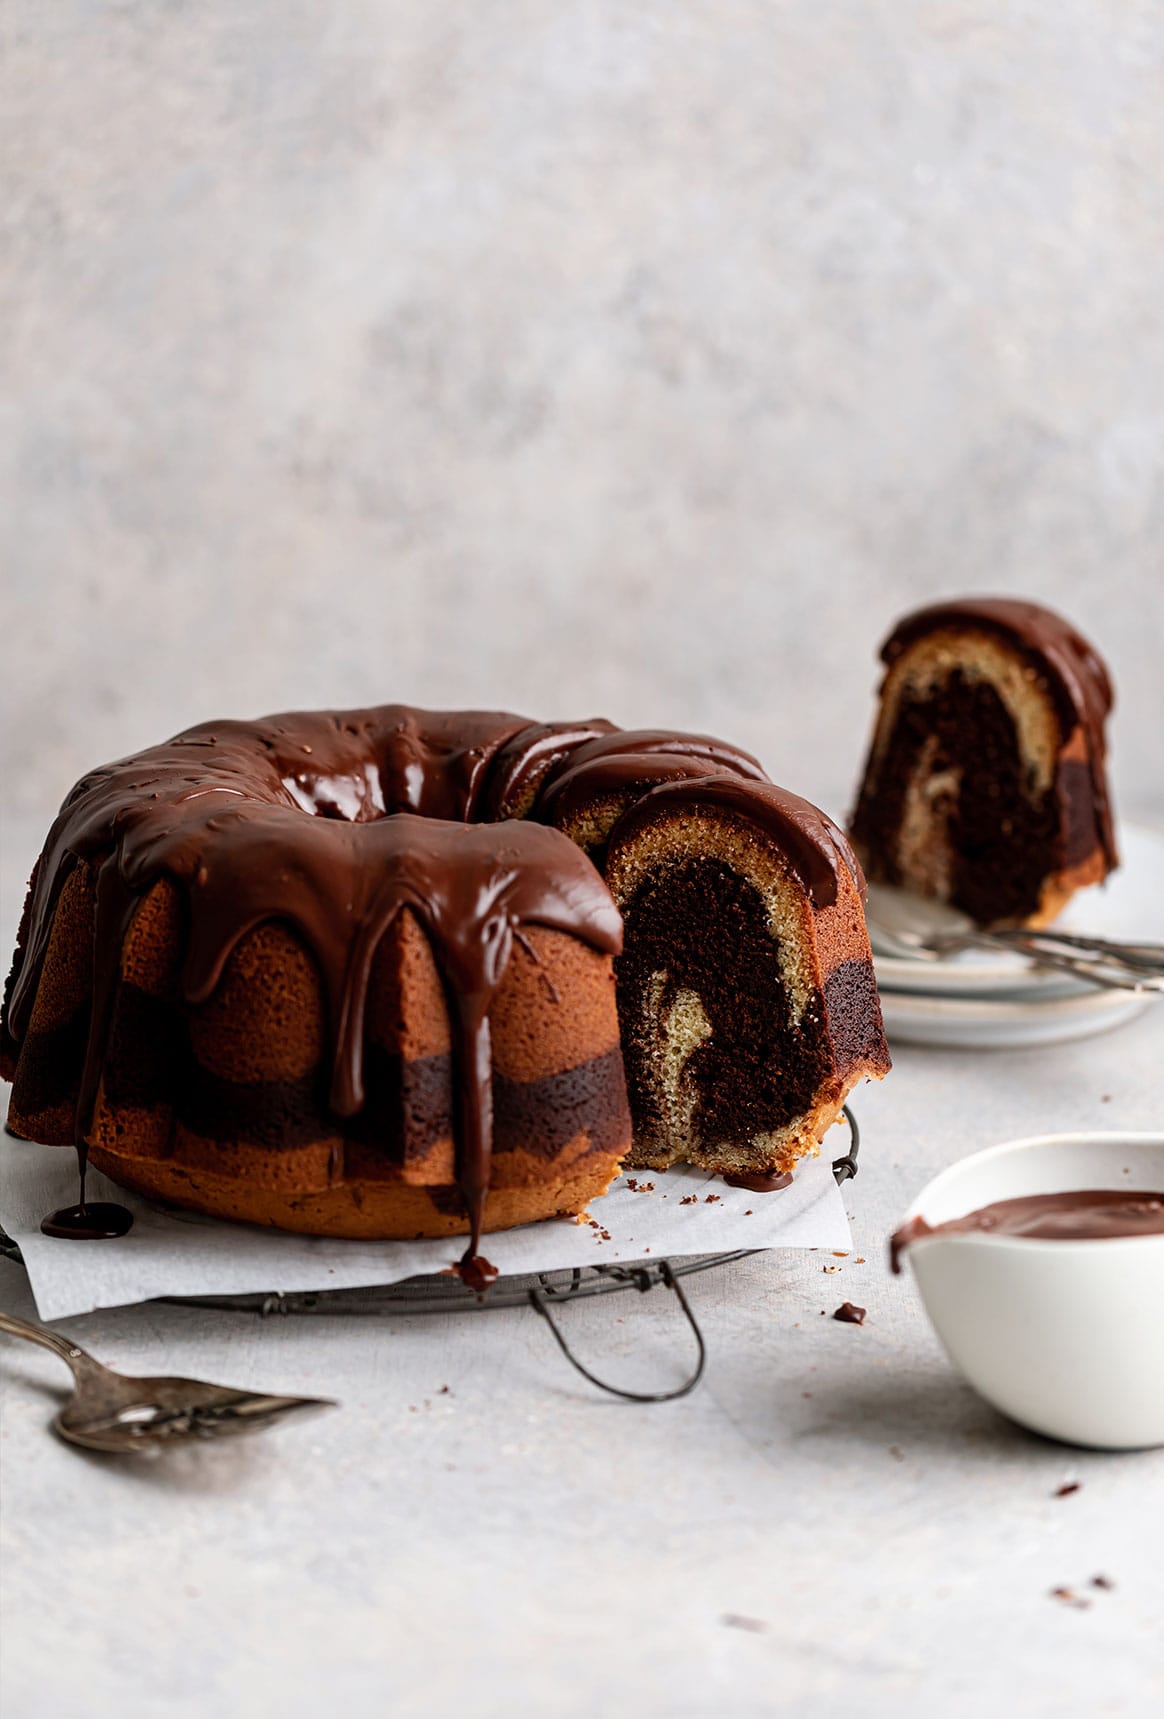 Nutella-Swirl Pound Cake Recipe - Lauren Chattman